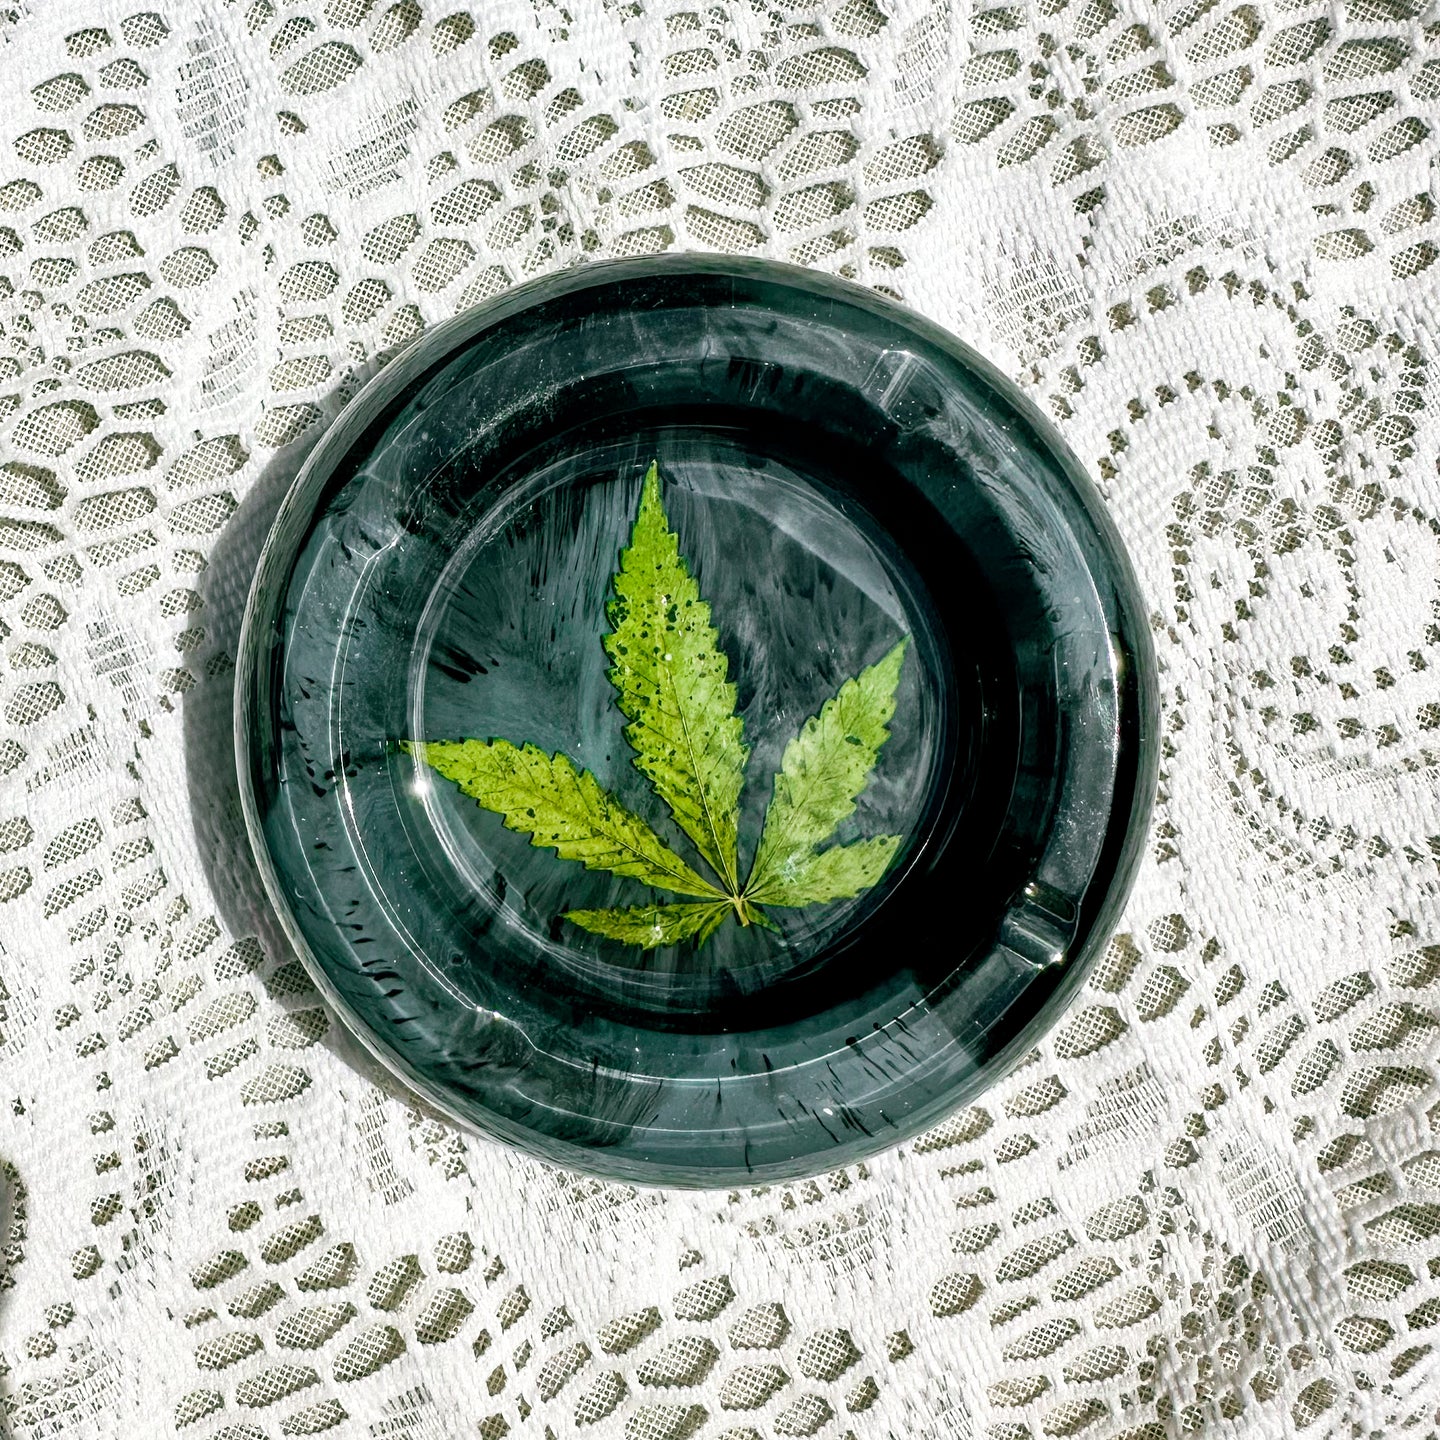 Green and black cannabis leaf round ashtray